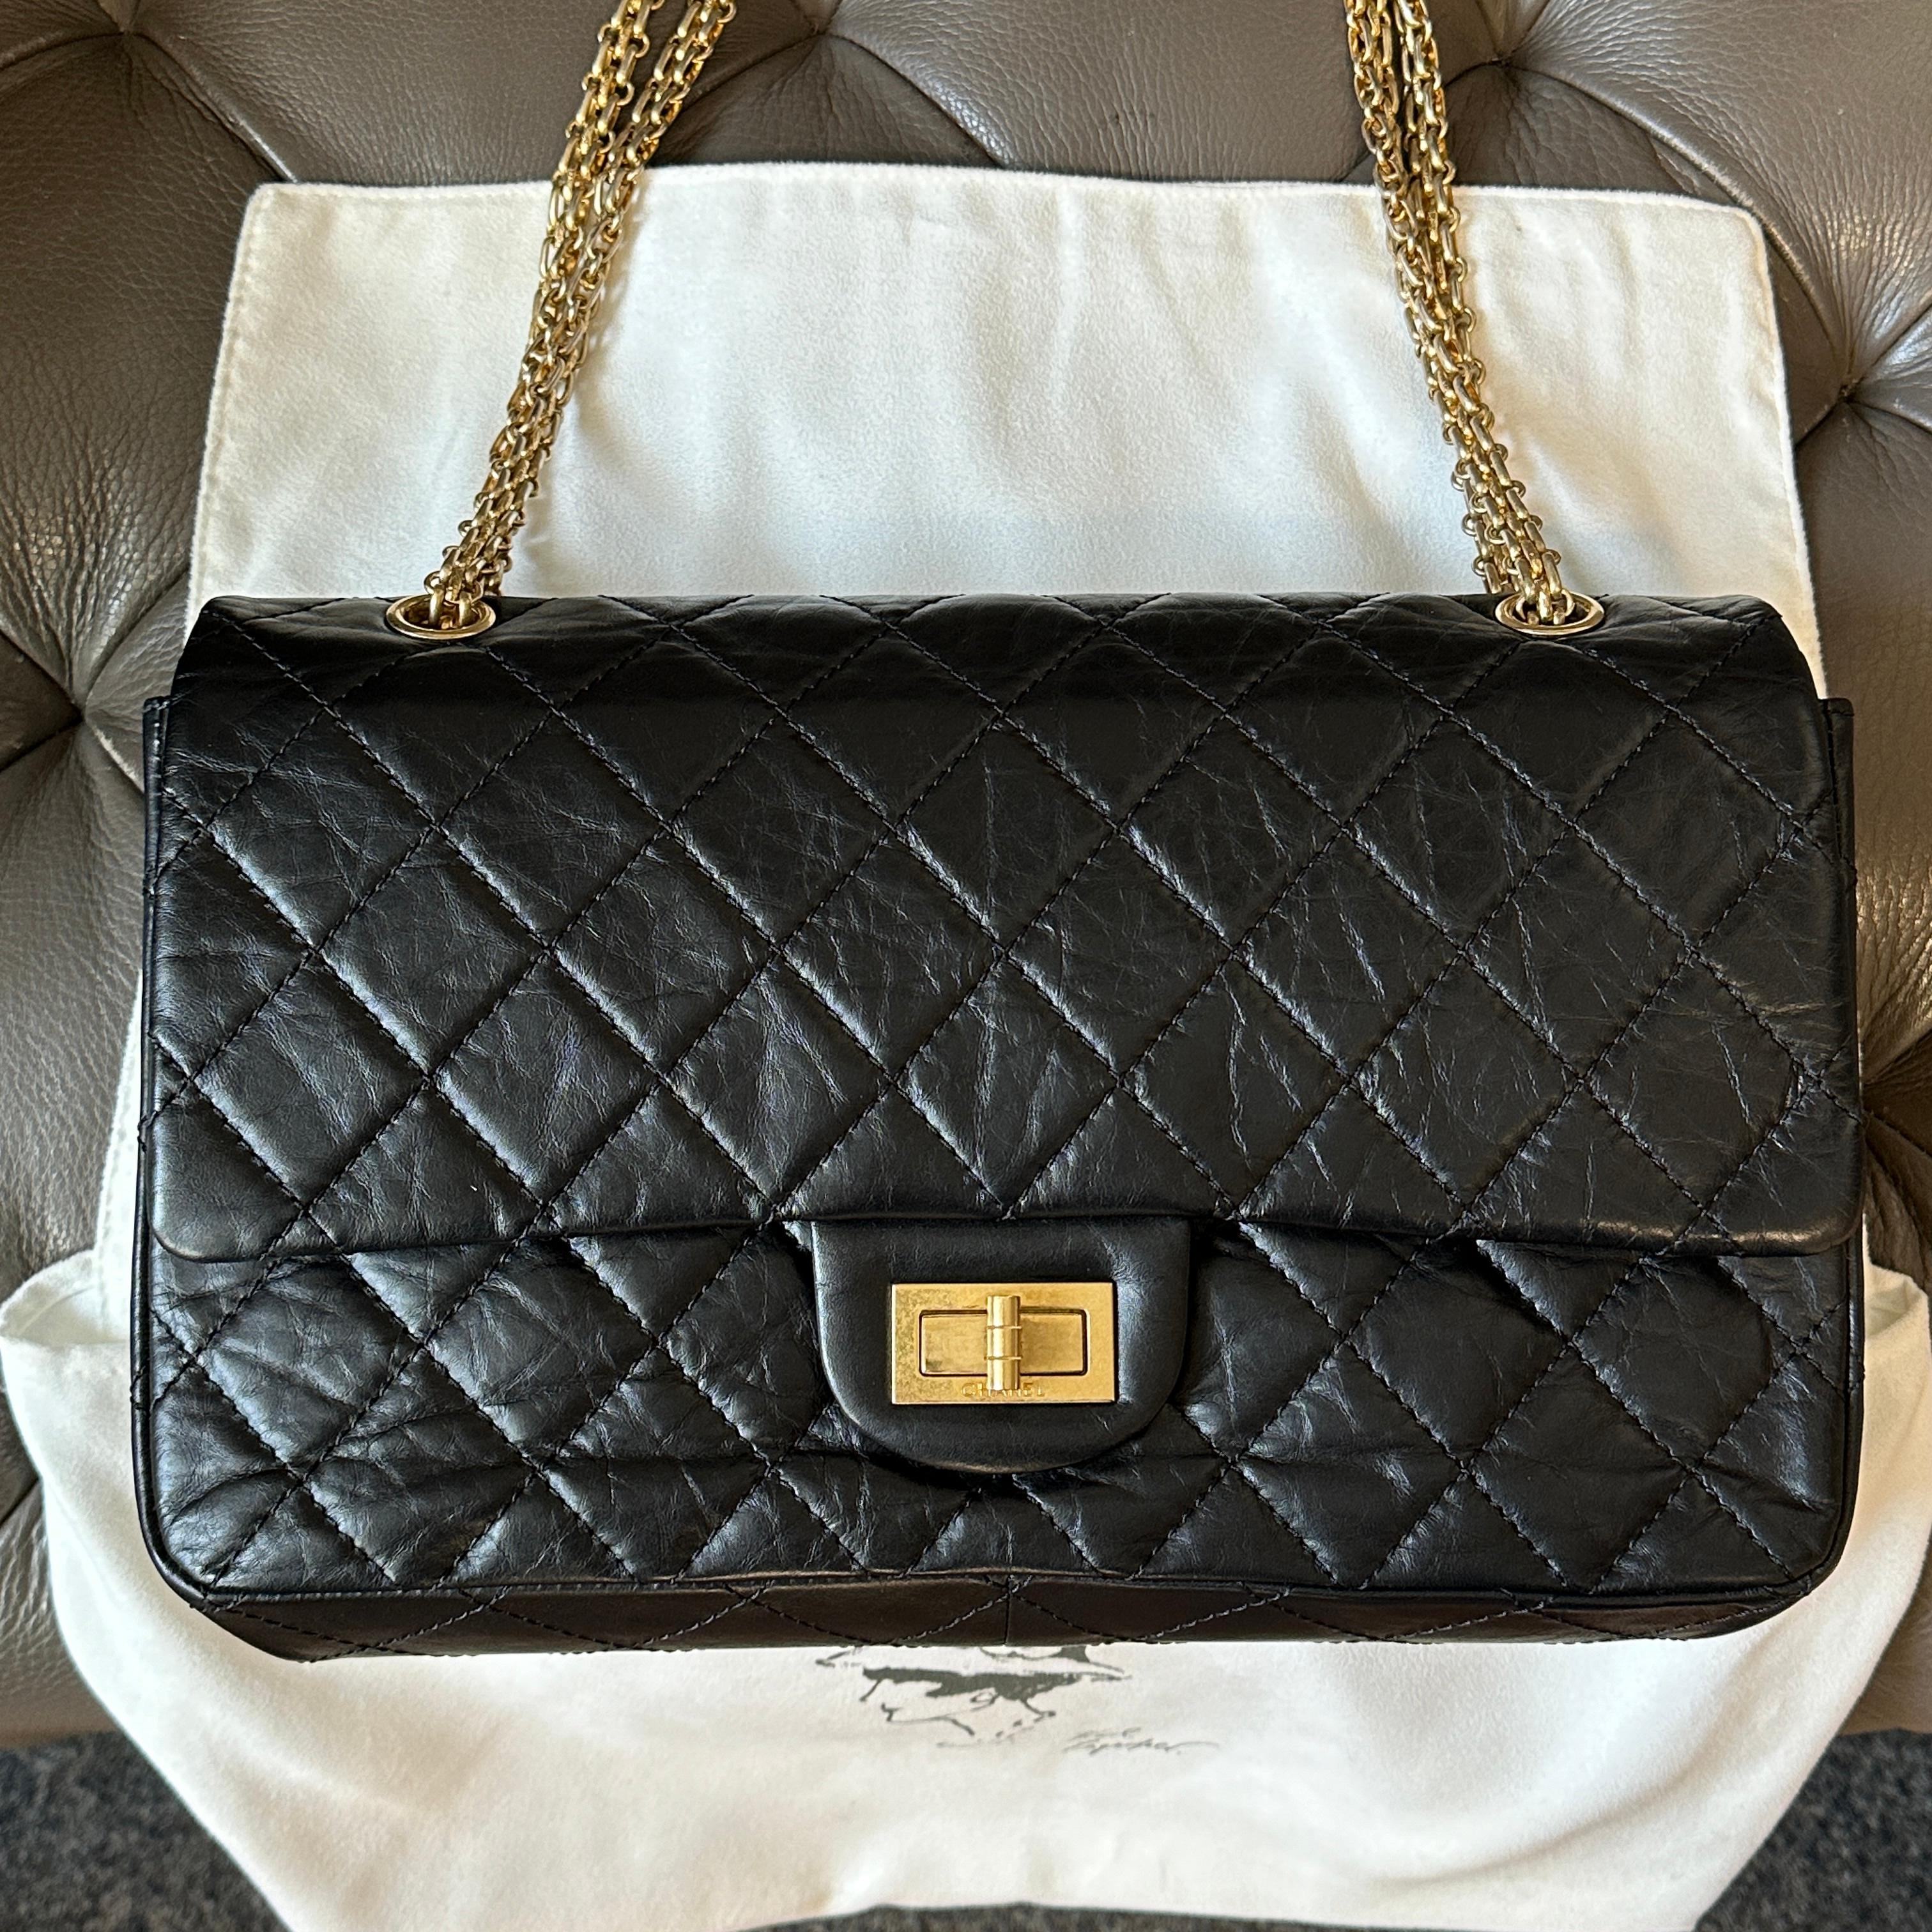 Women's Chanel A37590 Maxi, Jumbo Flap Bag 2.55 Black/Gold Distressed Lambskin For Sale